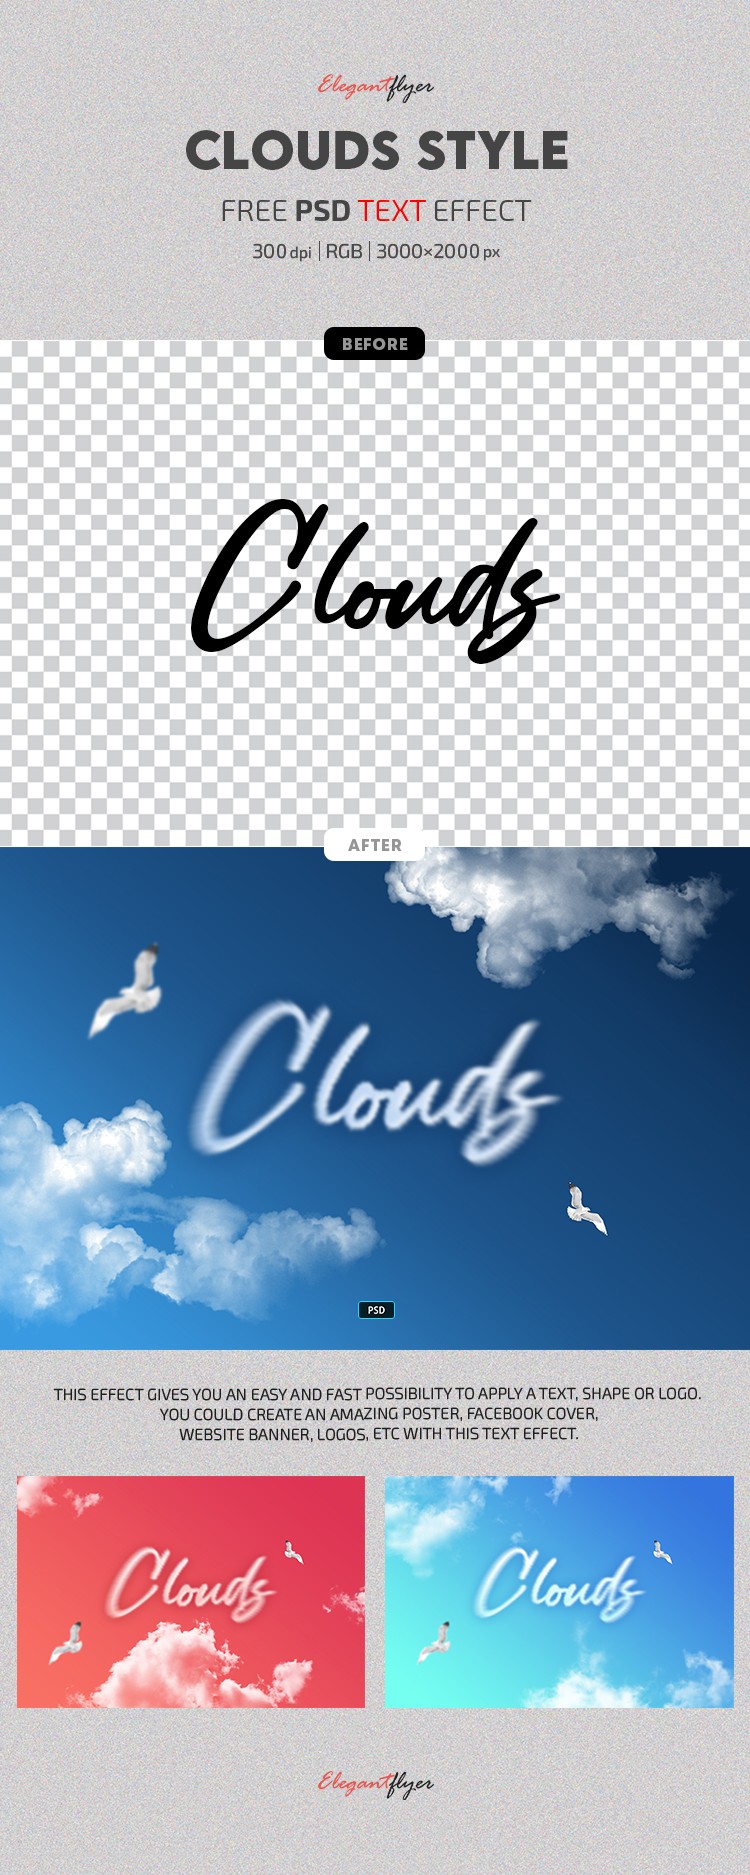 Clouds by ElegantFlyer